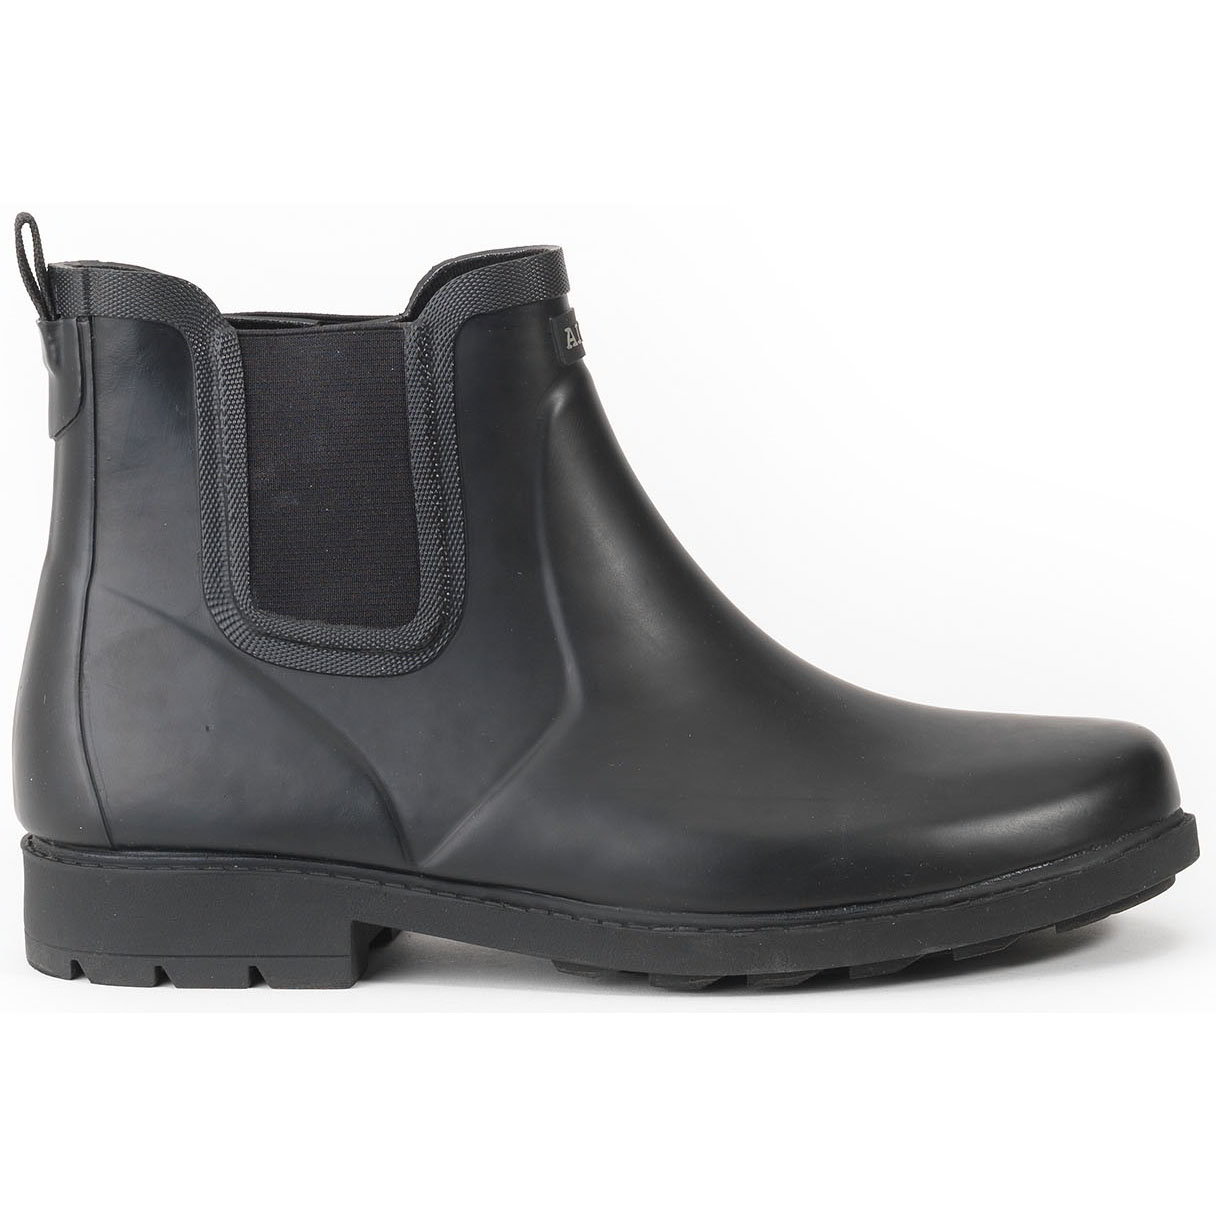 Aigle Mens Carville Wellies Ankle Rain Boots - UK 7.5 Black 2951